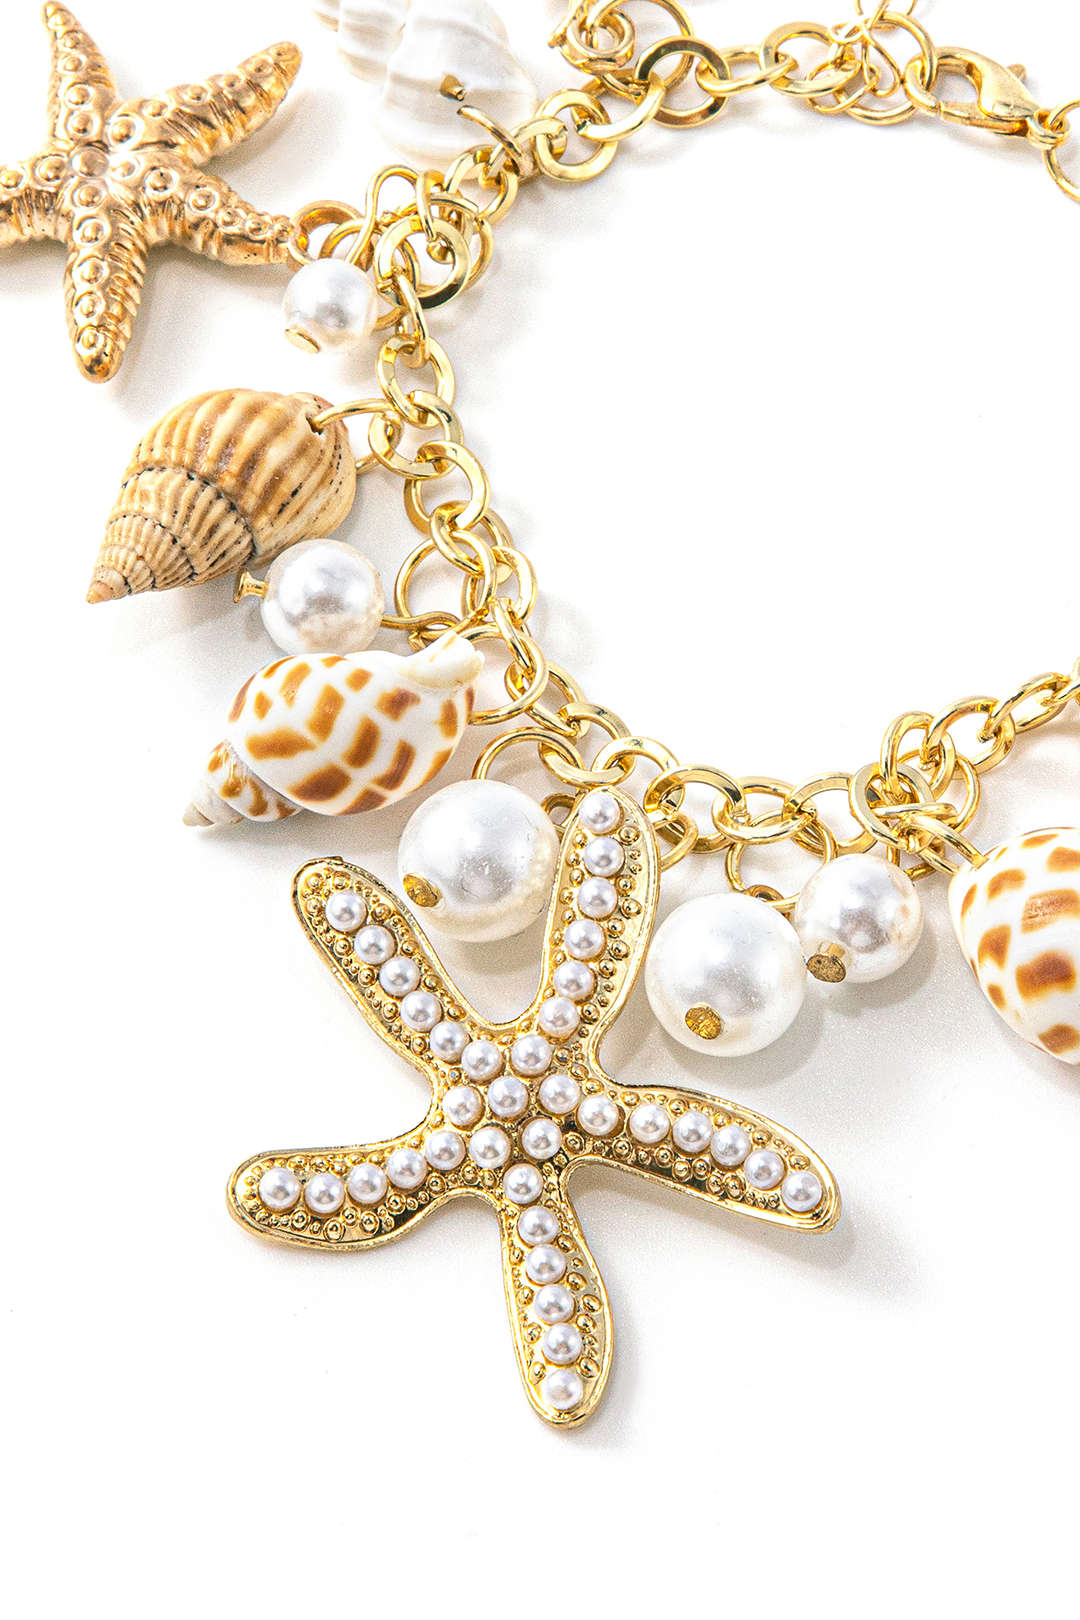 Seashell And Starfish Charm Bracelet